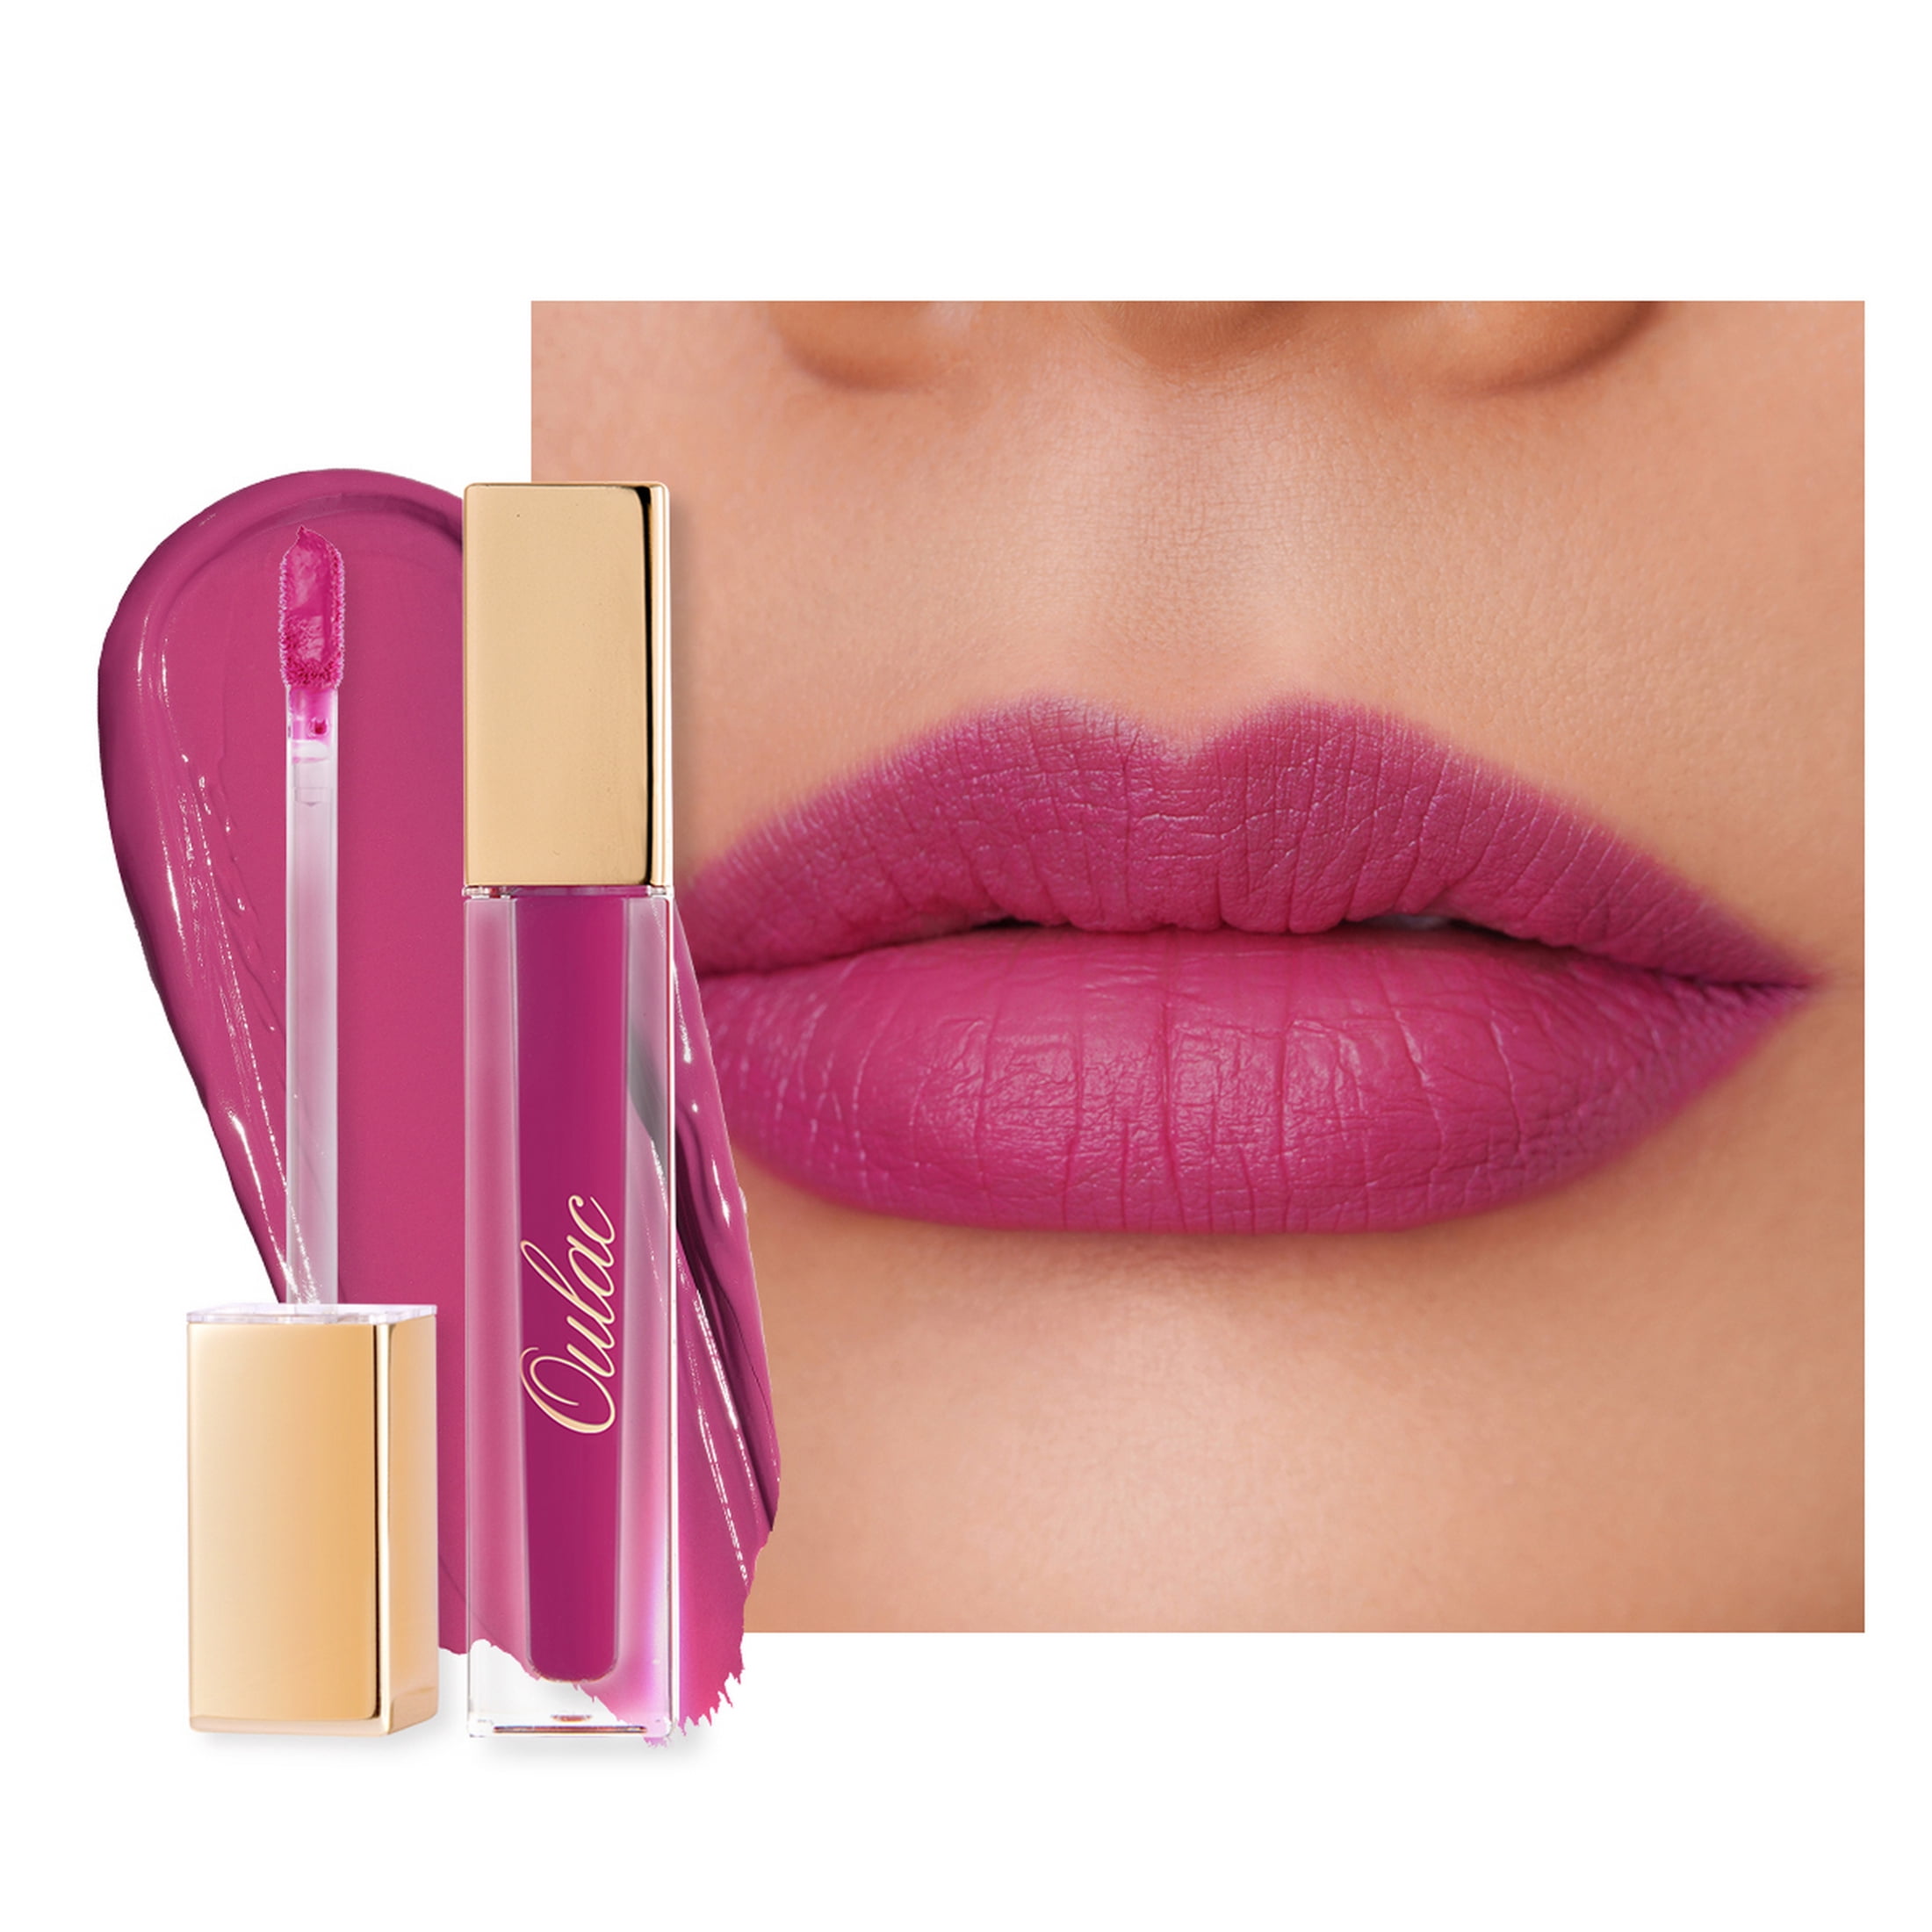 OULAC Kissproof Liquid Matte Lipstick, Lightweight and Fast Drying, Transfer, Creamy Pigmented, 4.5 mL / 0.15 fl.oz,Sunset Kiss (M06) - Walmart.com